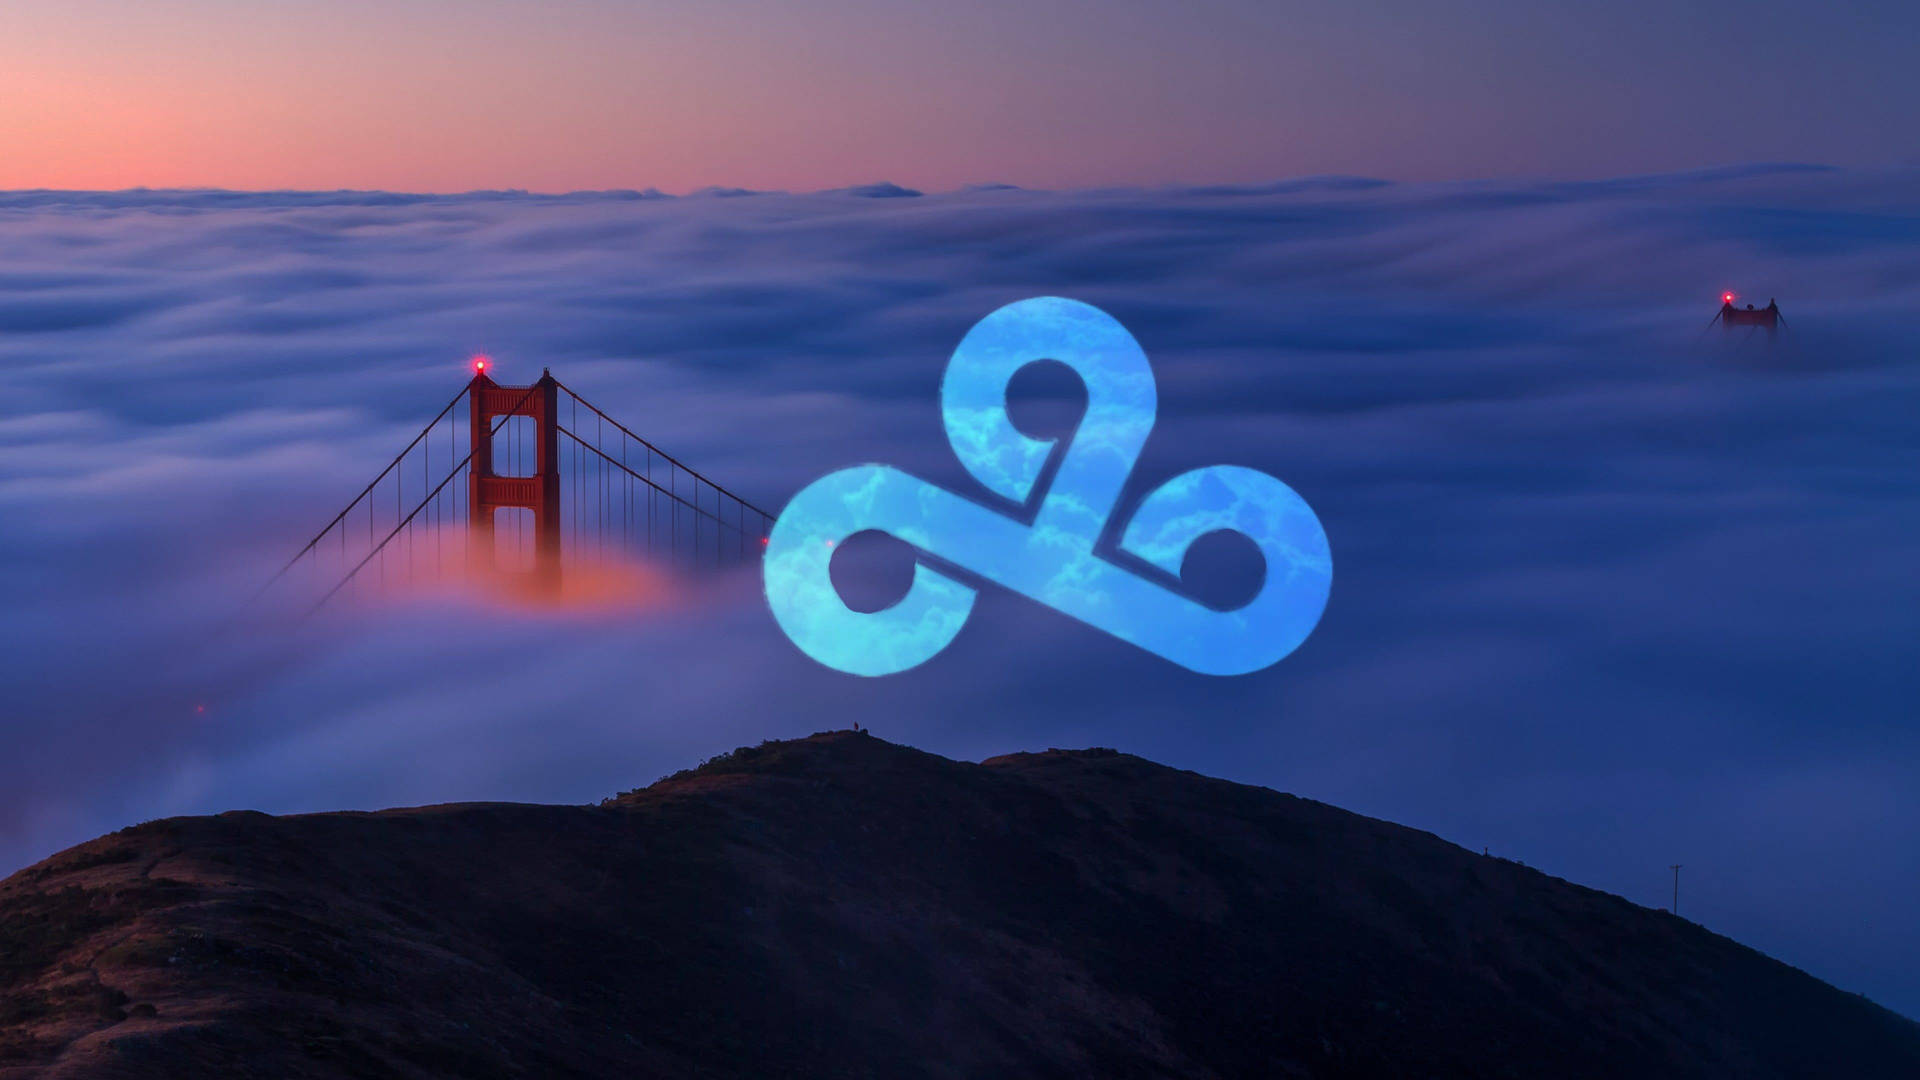 Cloud9 Golden Gate Bridge Cloud Logo Background